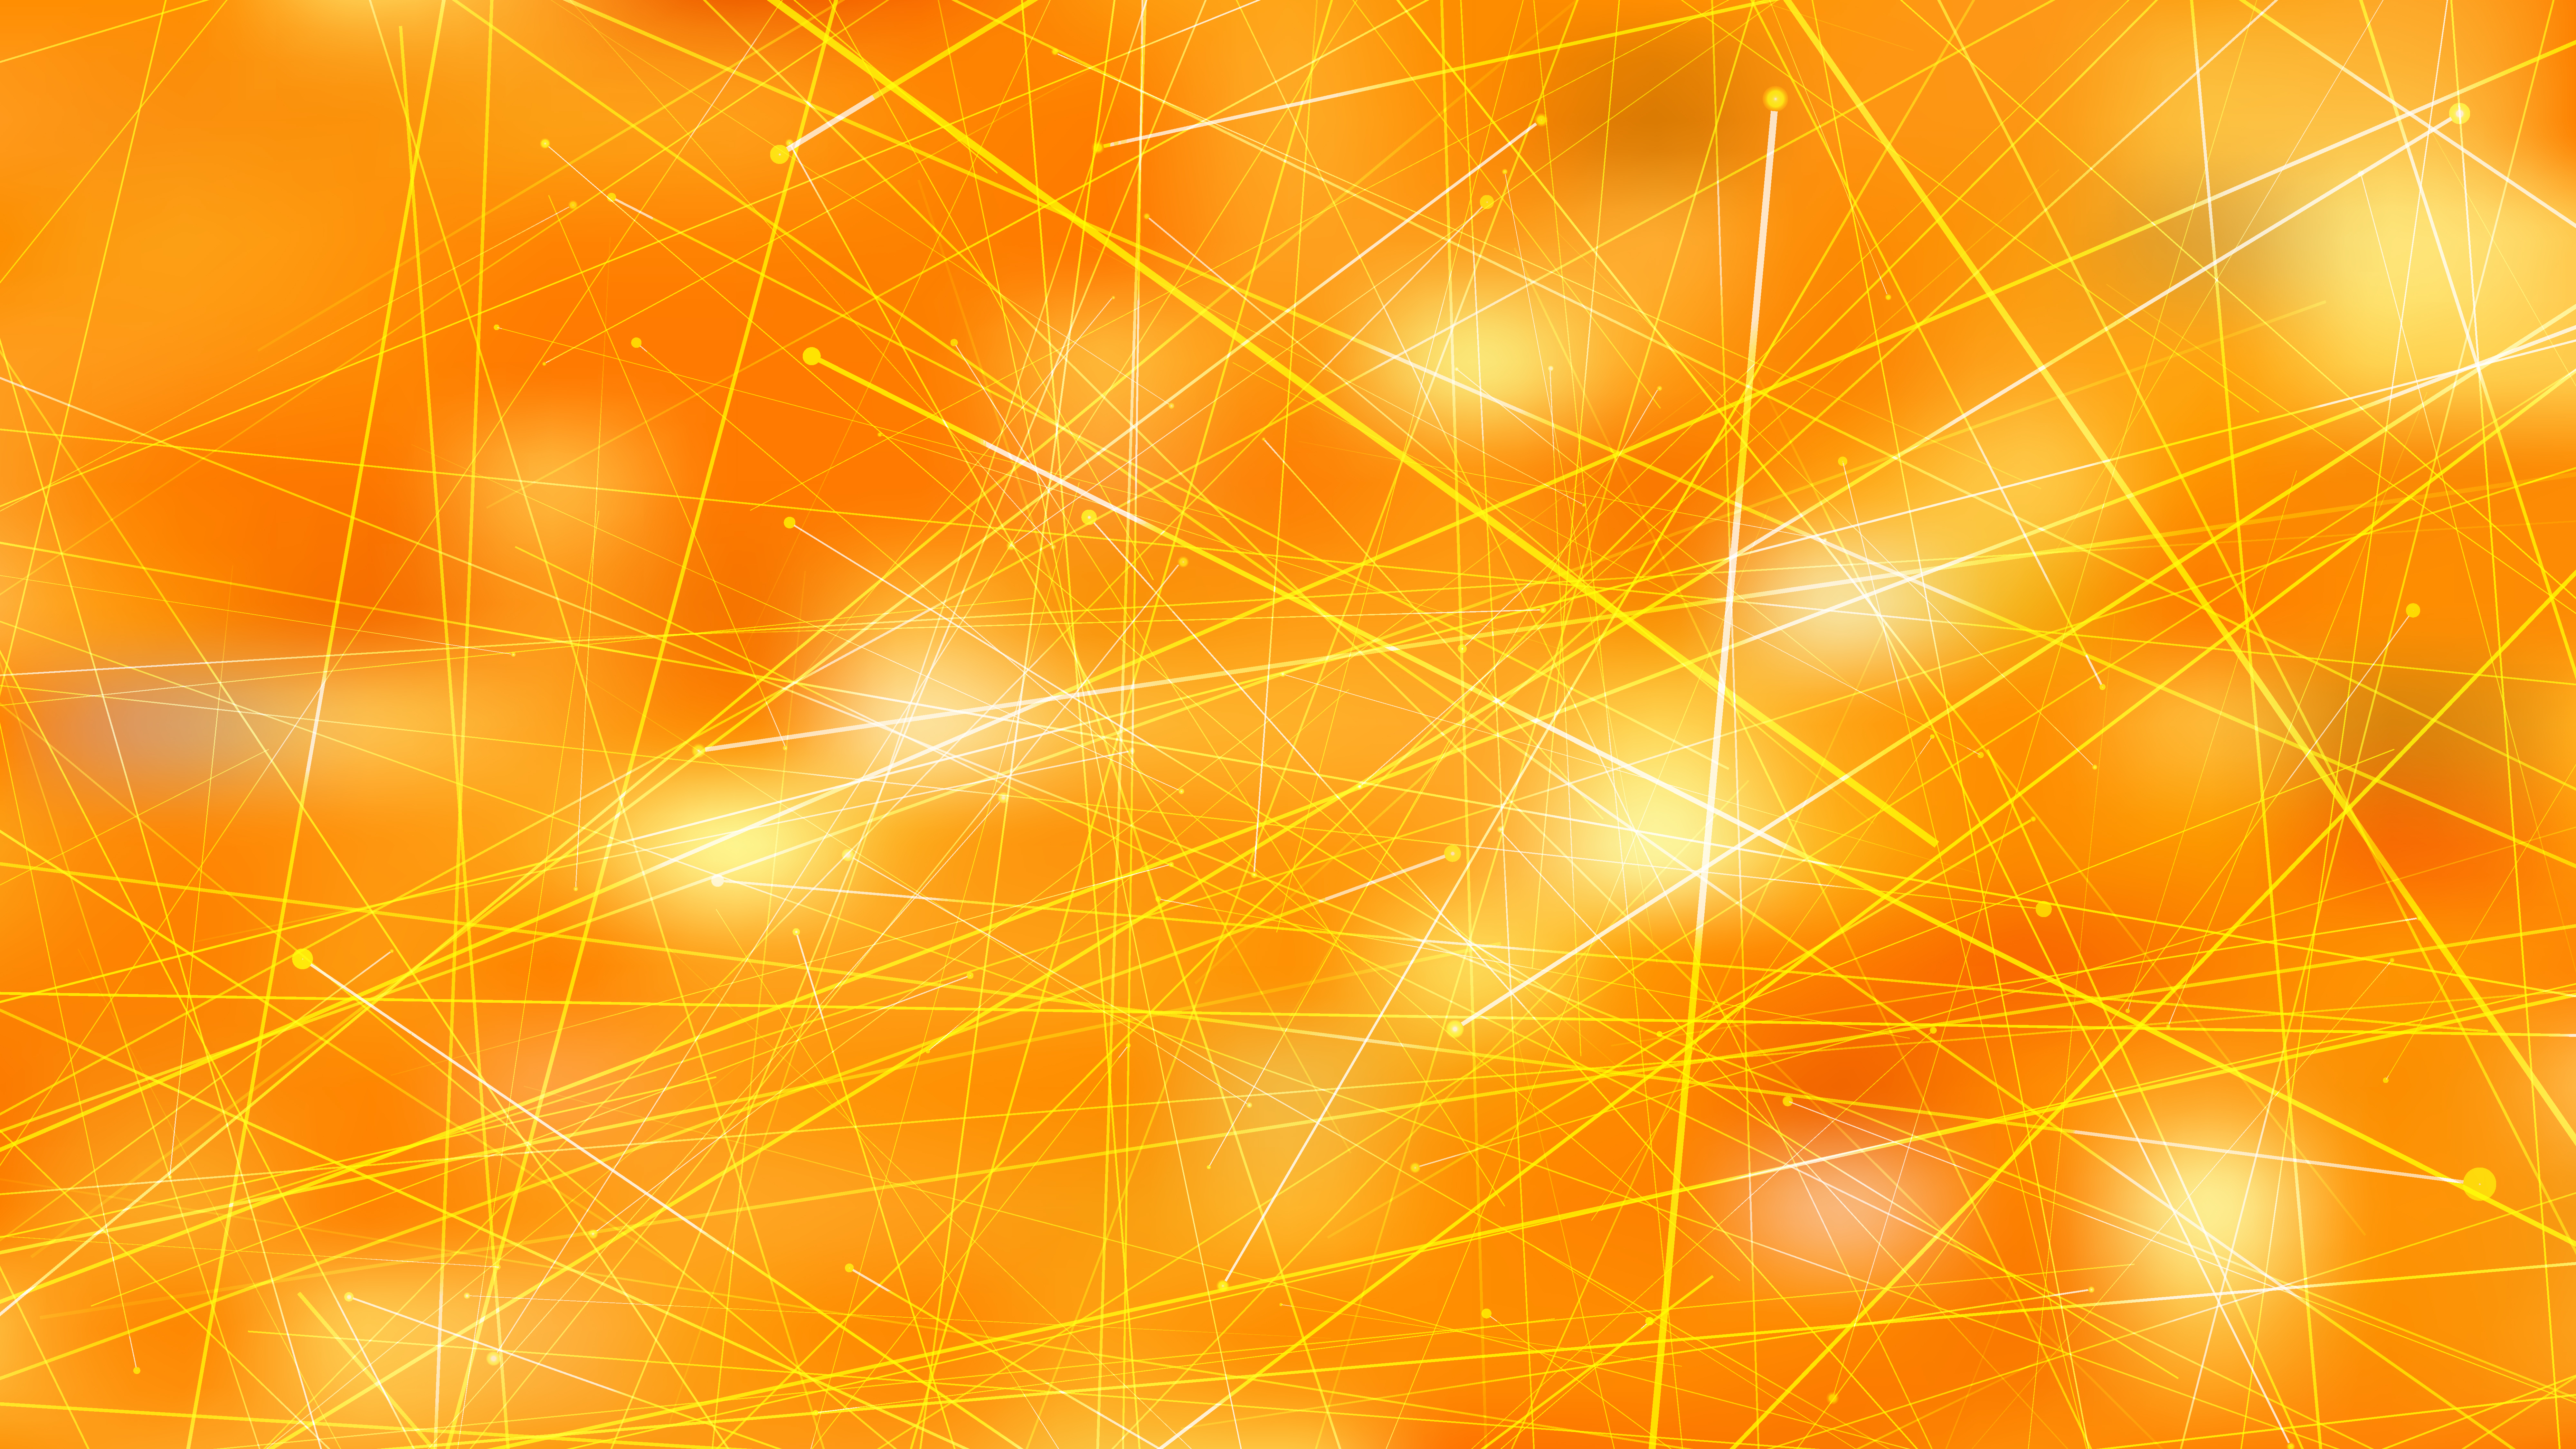 Abstract Asymmetric Random Lines Orange Background Illustration